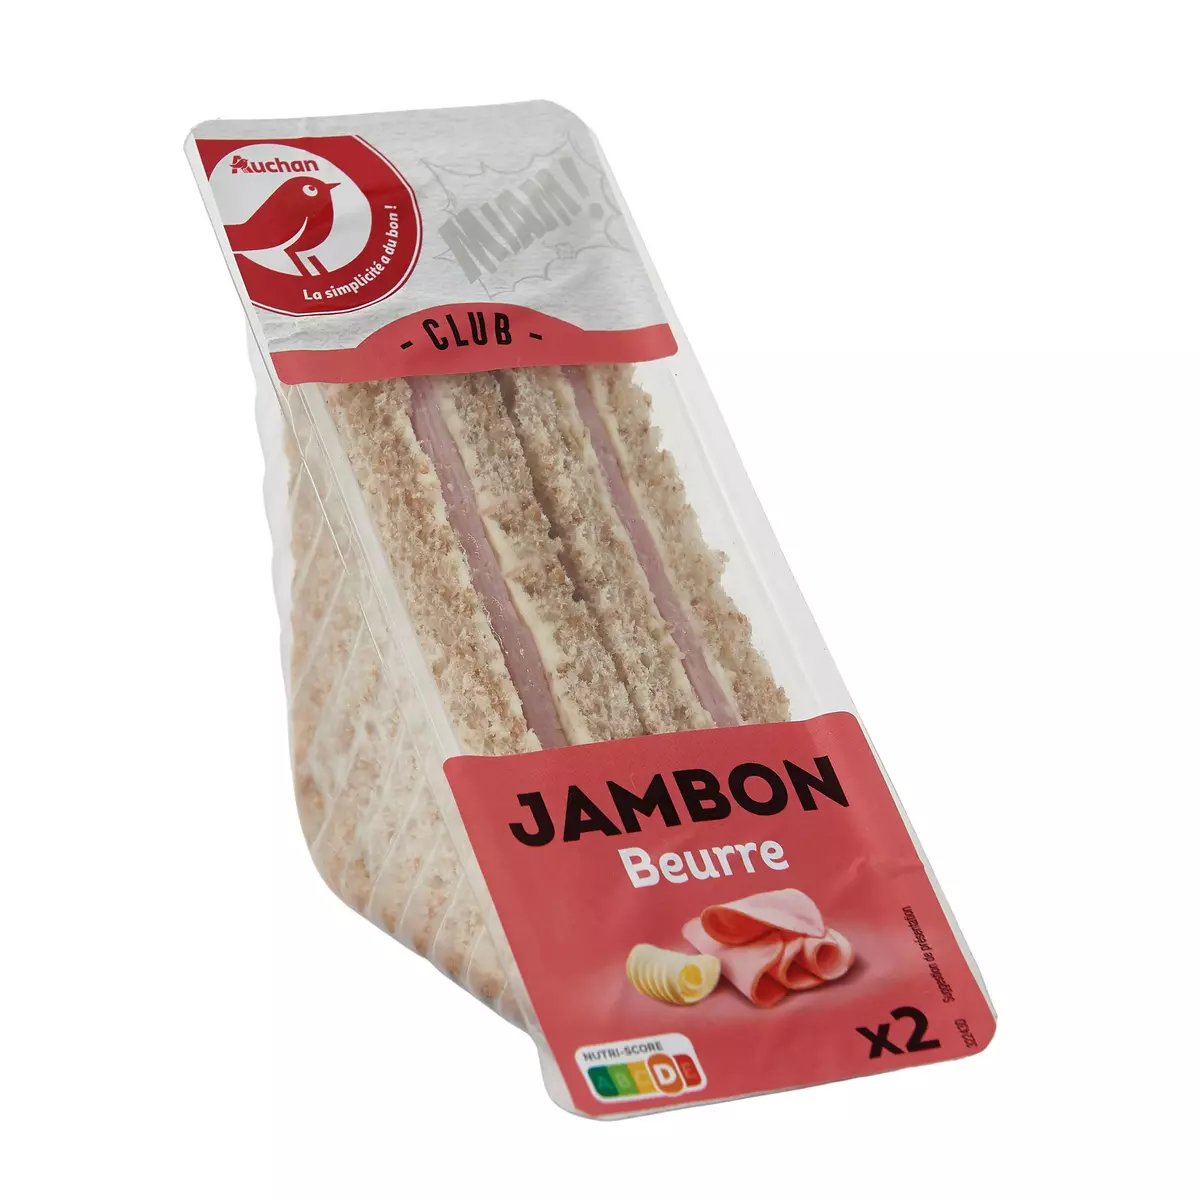 AUCHAN Sandwich club jambon beurre 125g